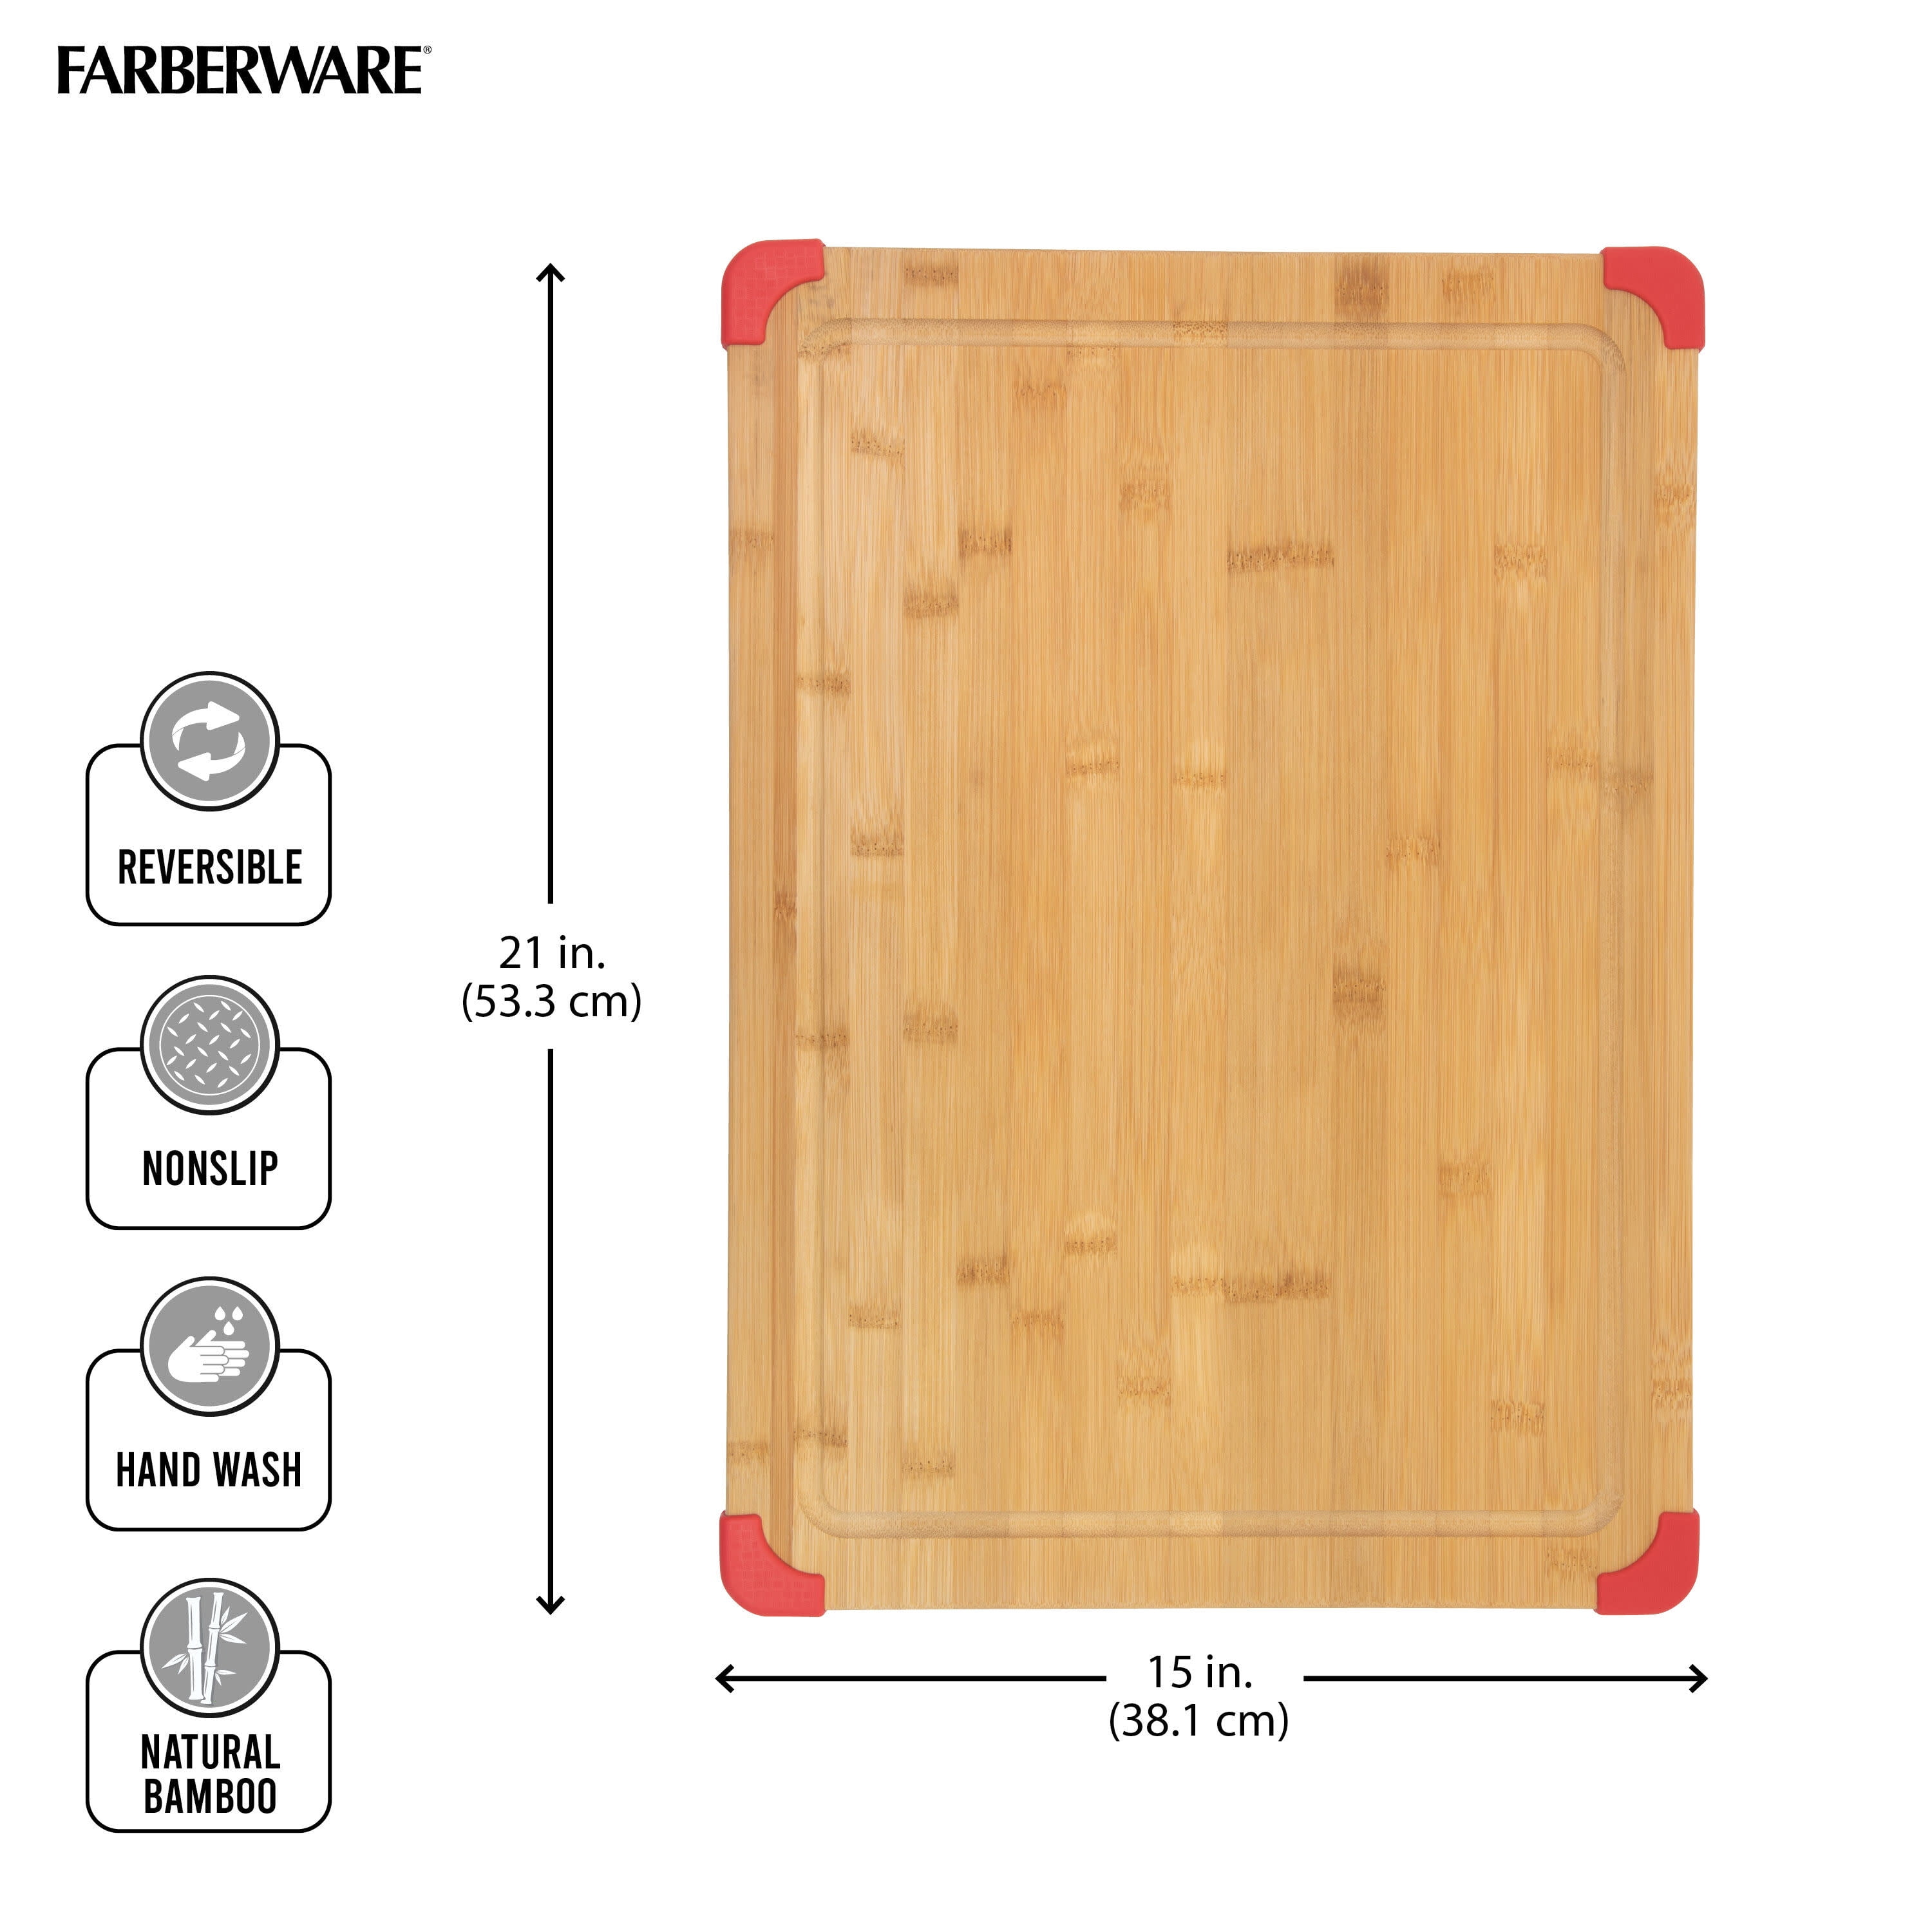 3-Piece Bamboo Cutting Board Set, 15 x 12, 12 x 9 and 9 x 6